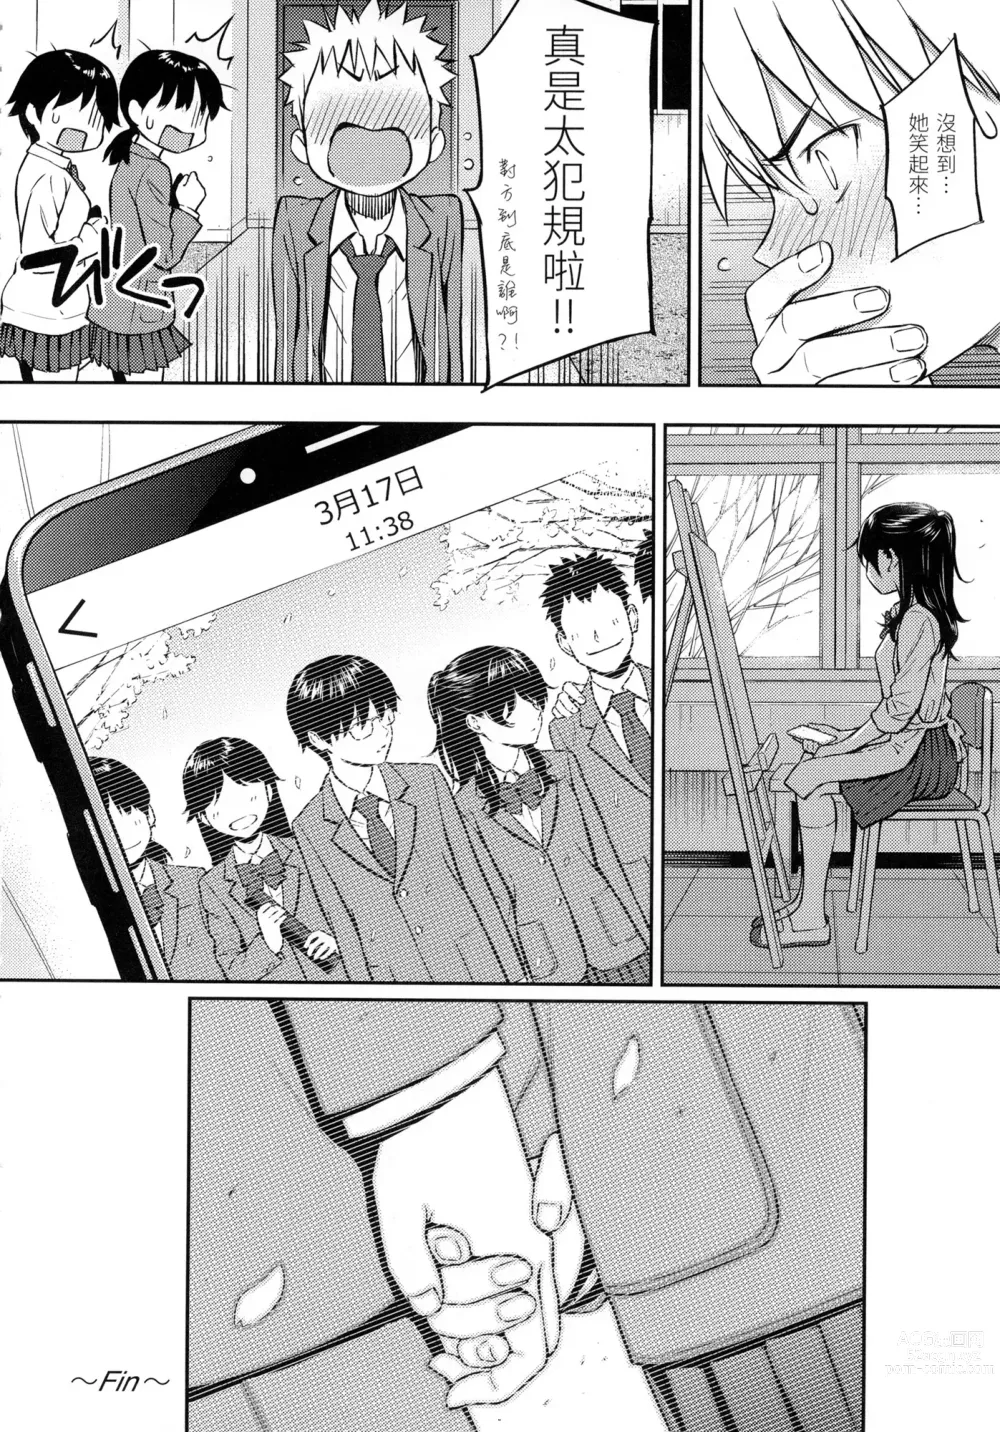 Page 213 of manga 求愛異鄉人 (decensored)